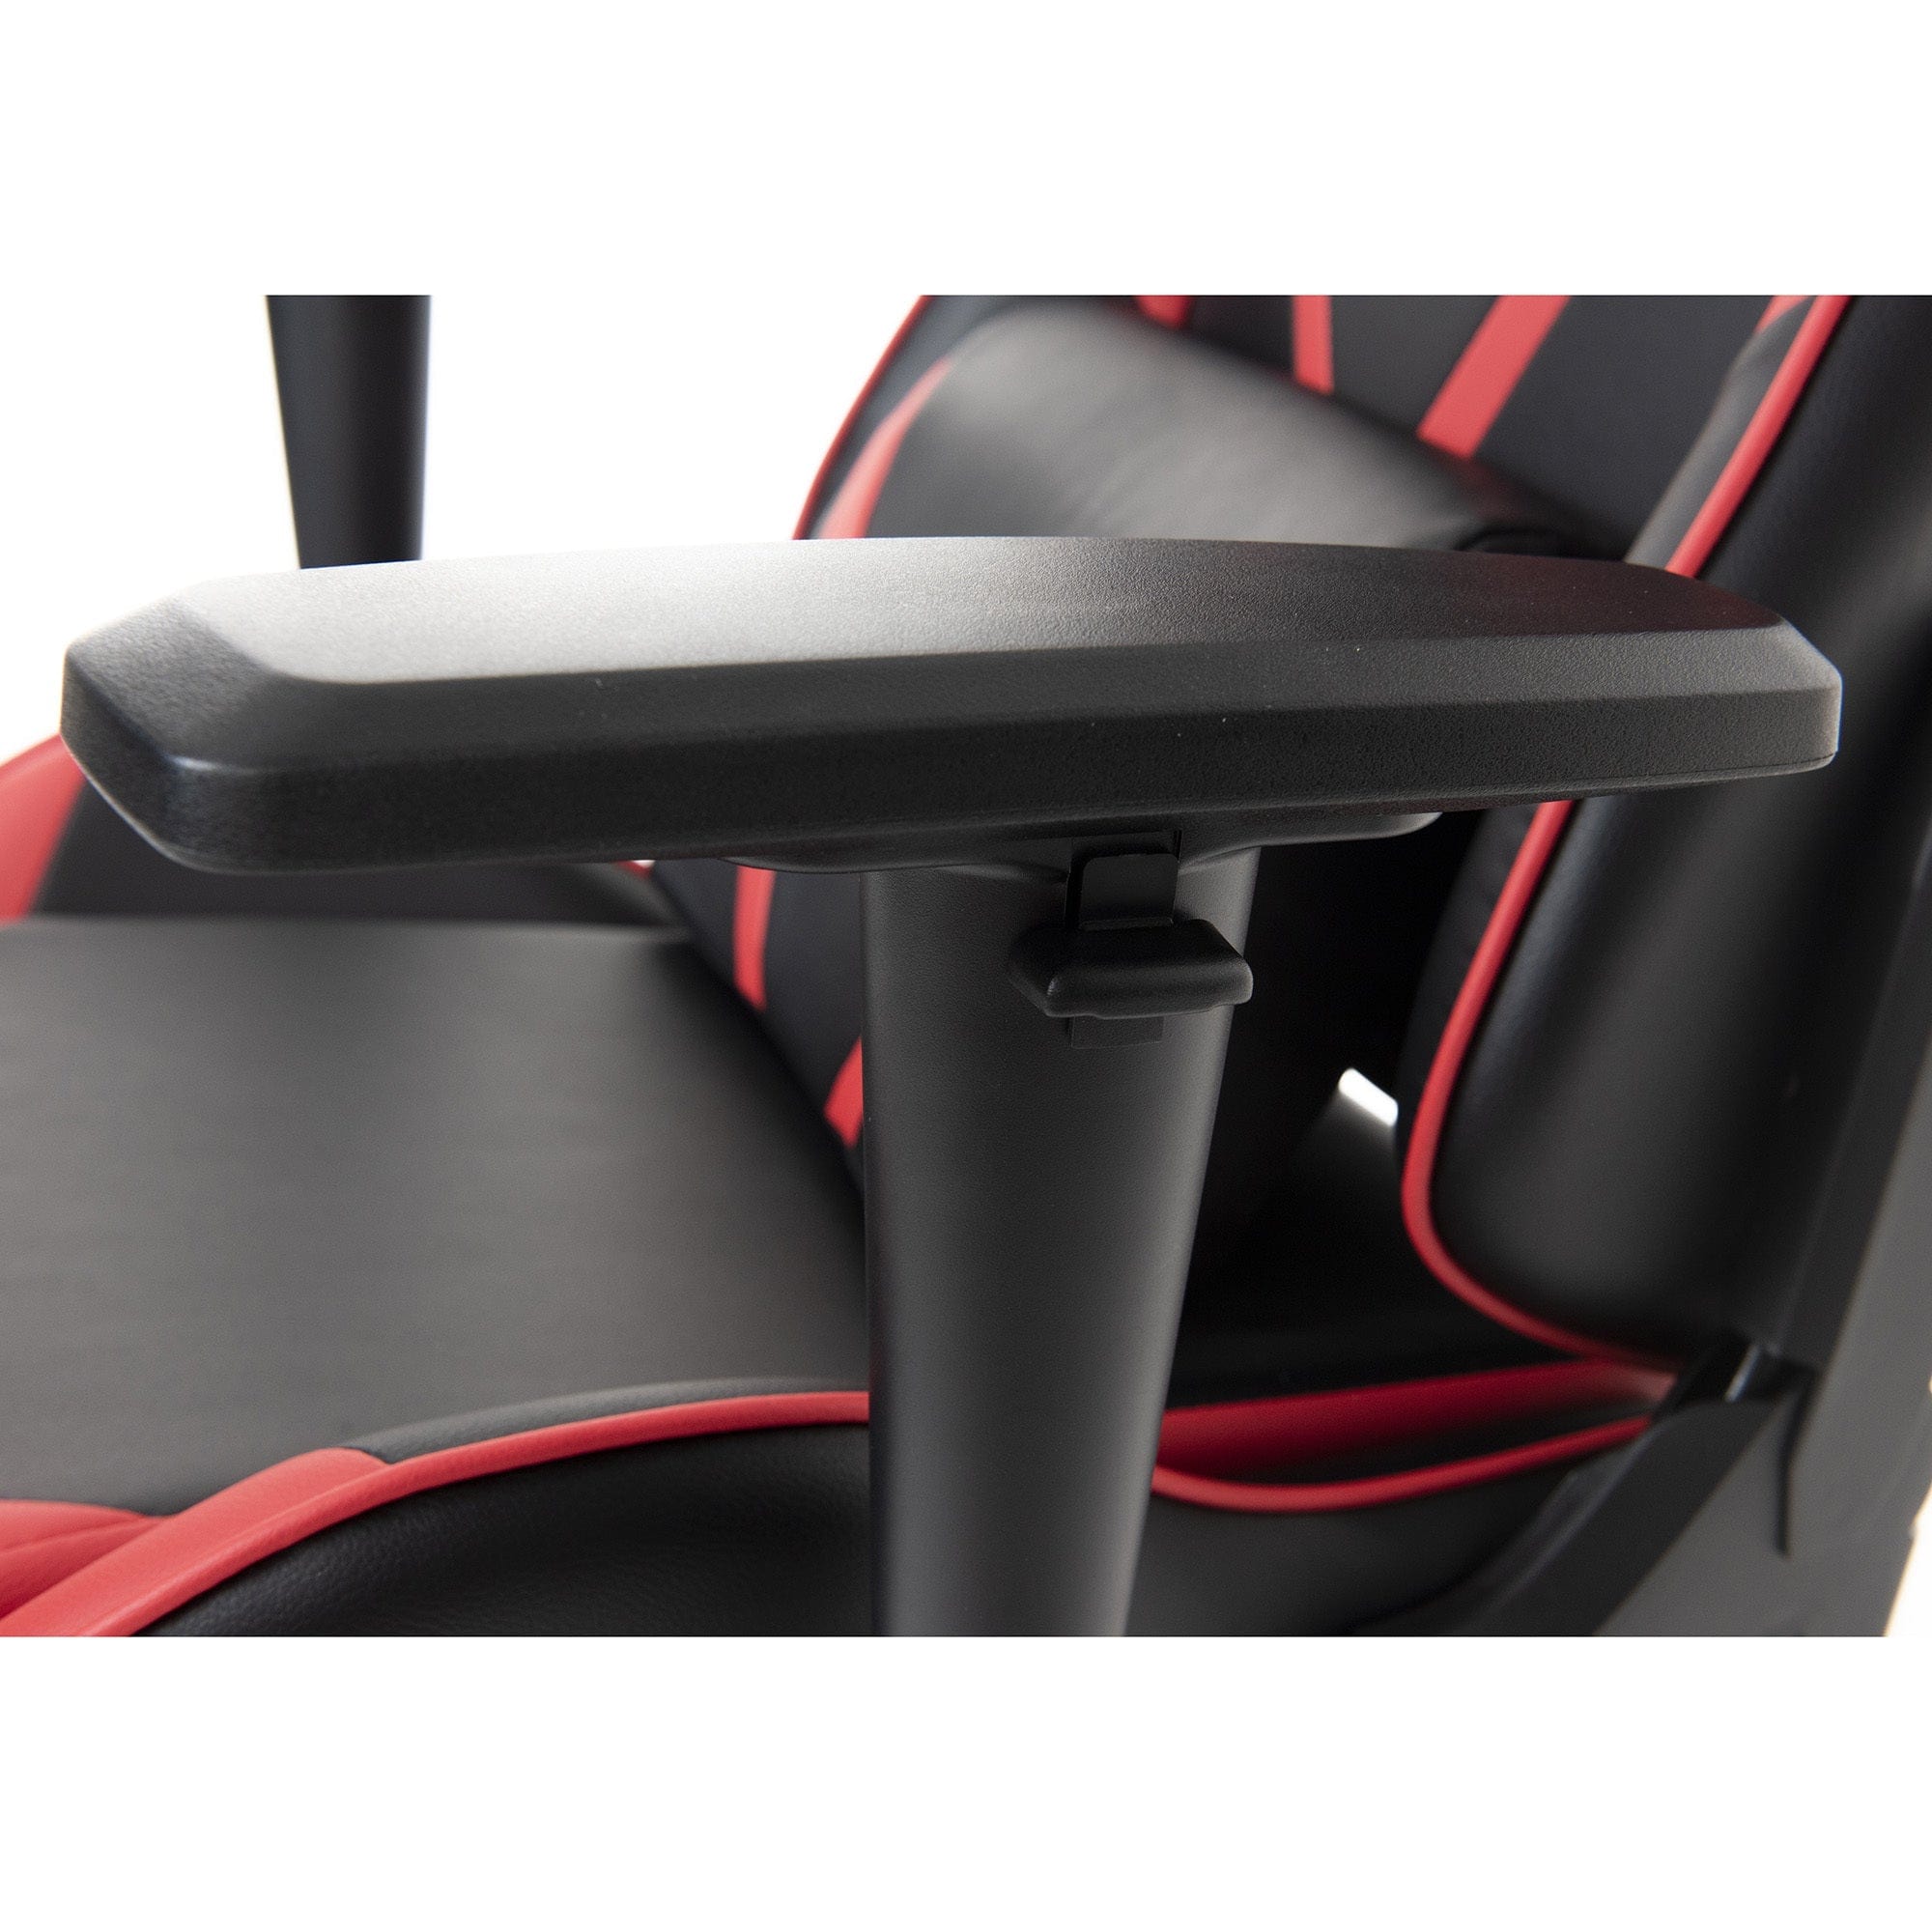 GalaXHero Class 4 Gas Gaming Chair In Red/Grey